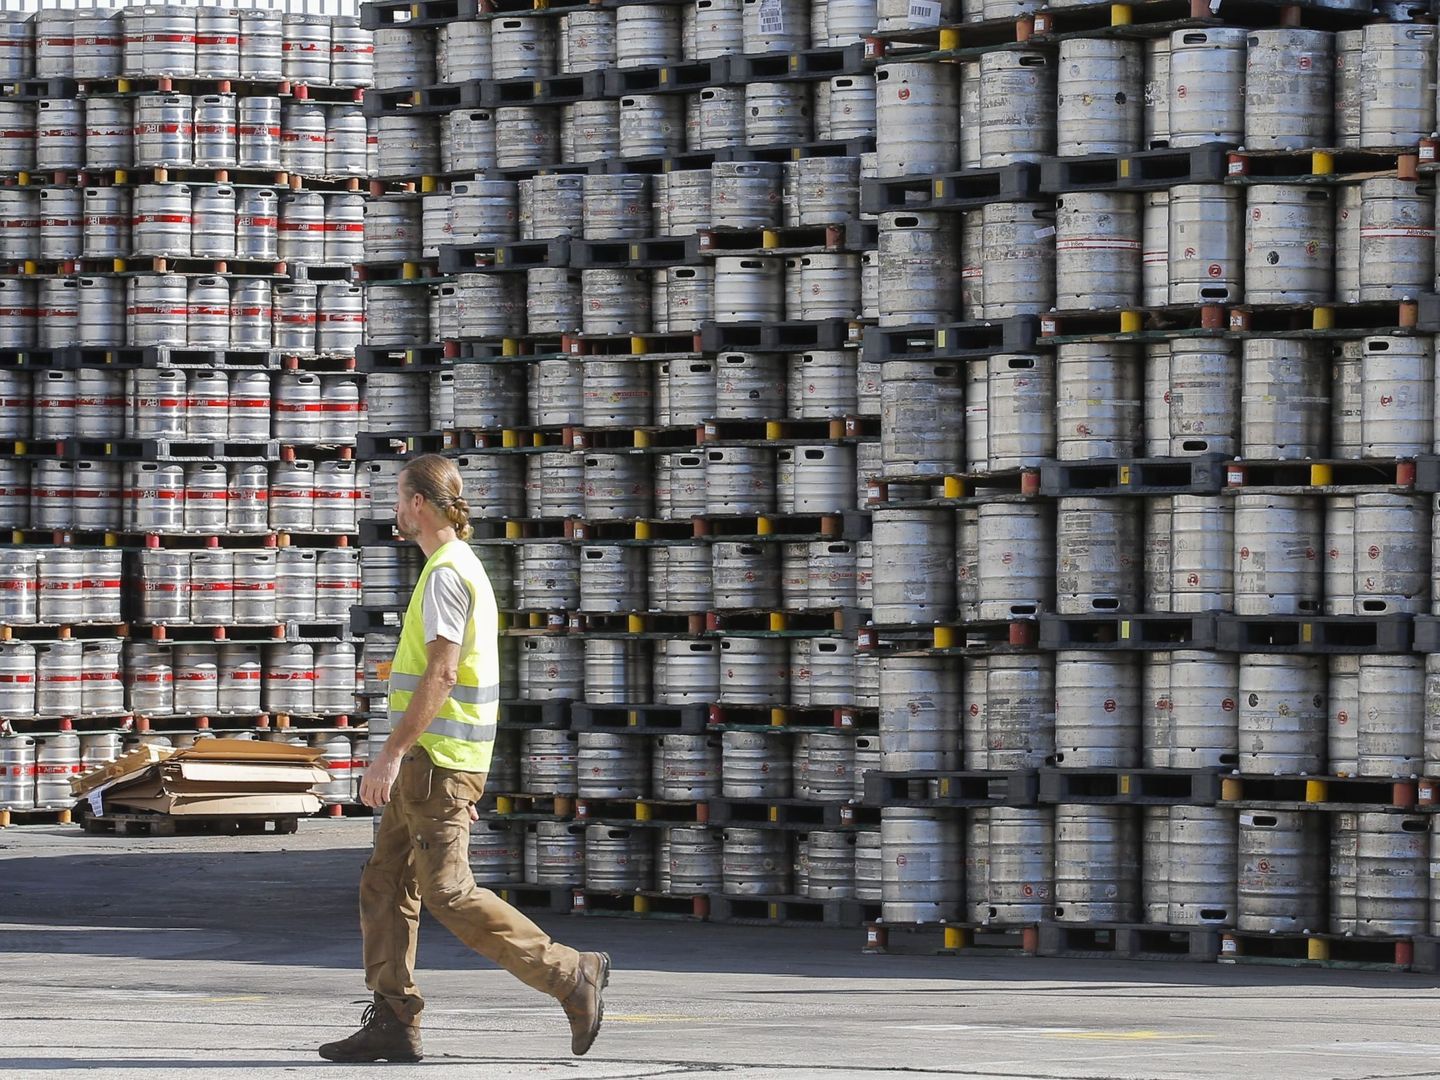 Barriles de cerveza almacenados. (Reuters)